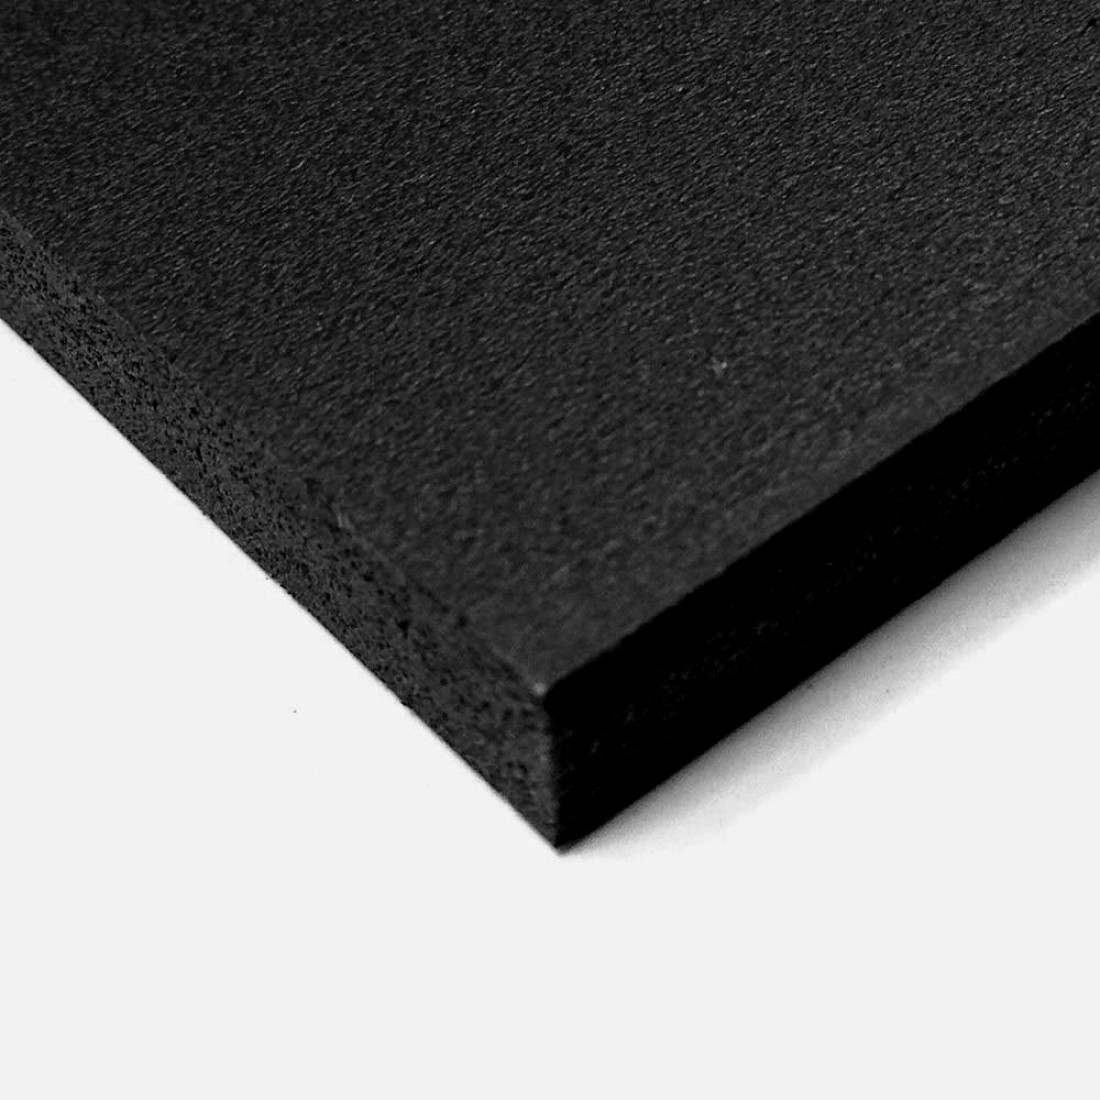 Вспененный пвх 3. Пластик черный ПВХ /векаплан СФ/ 10мм/. ПВХ RS-Foam 2мм (2,03х3,05м) 0,65г/см3. Вспененный ПВХ-пластик UNEXT-Color,толщина 3 мм,черный, 1560 х3050 мм.